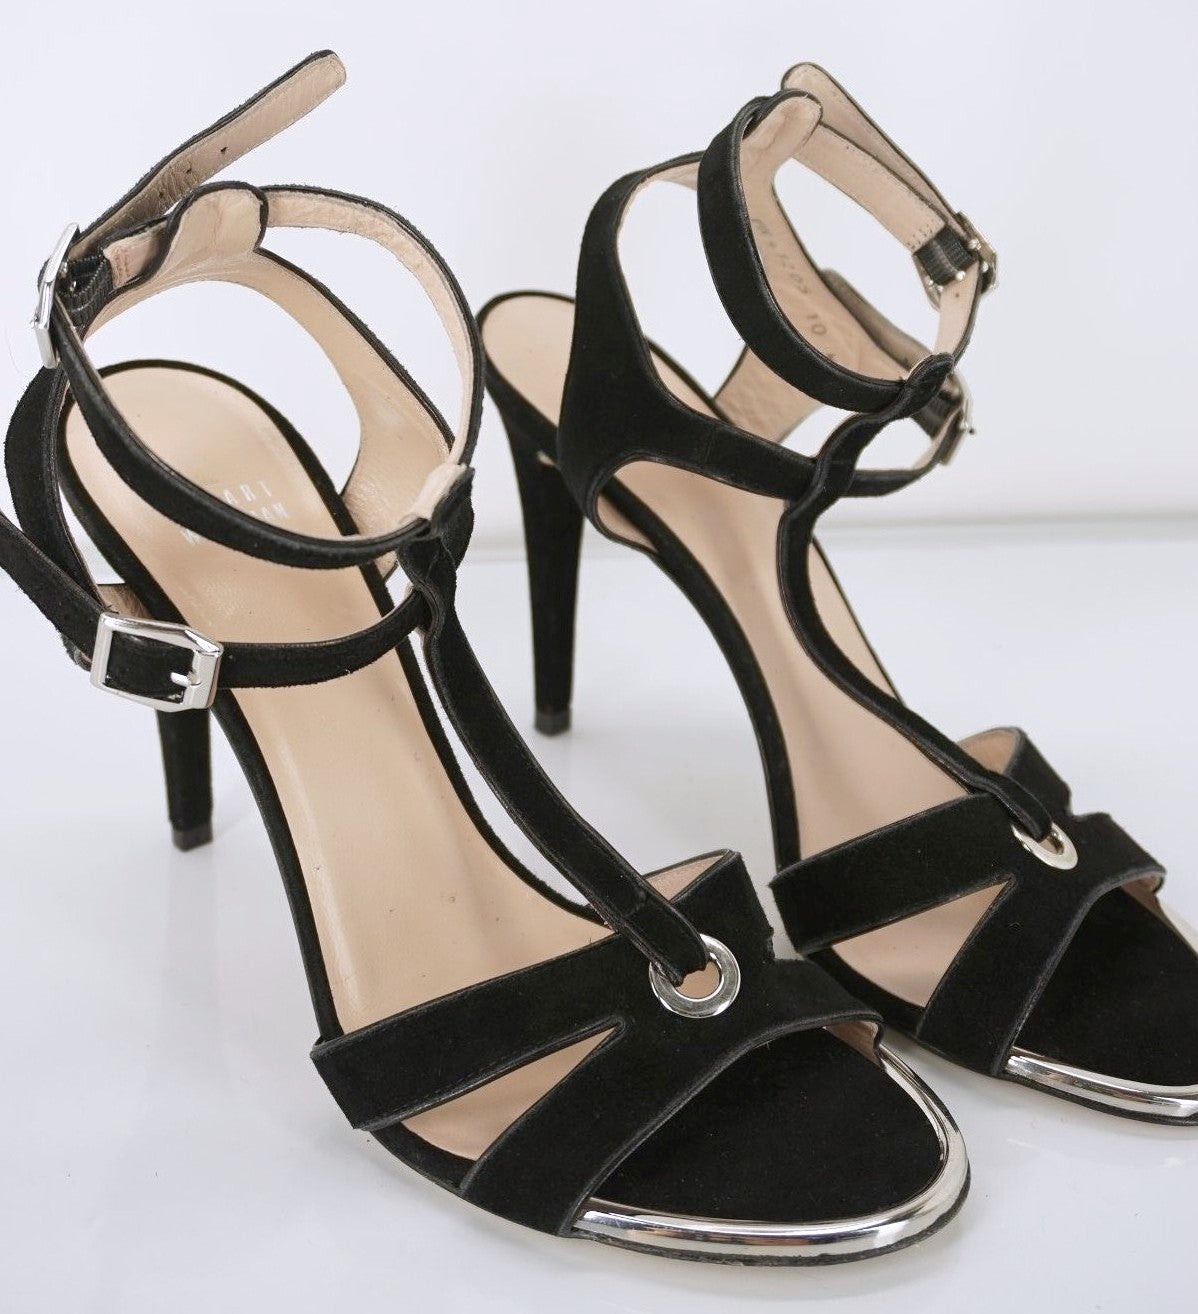 Stuart Weitzman Black Suede 'Accent' Caged T Strappy sandals Size 10 $395